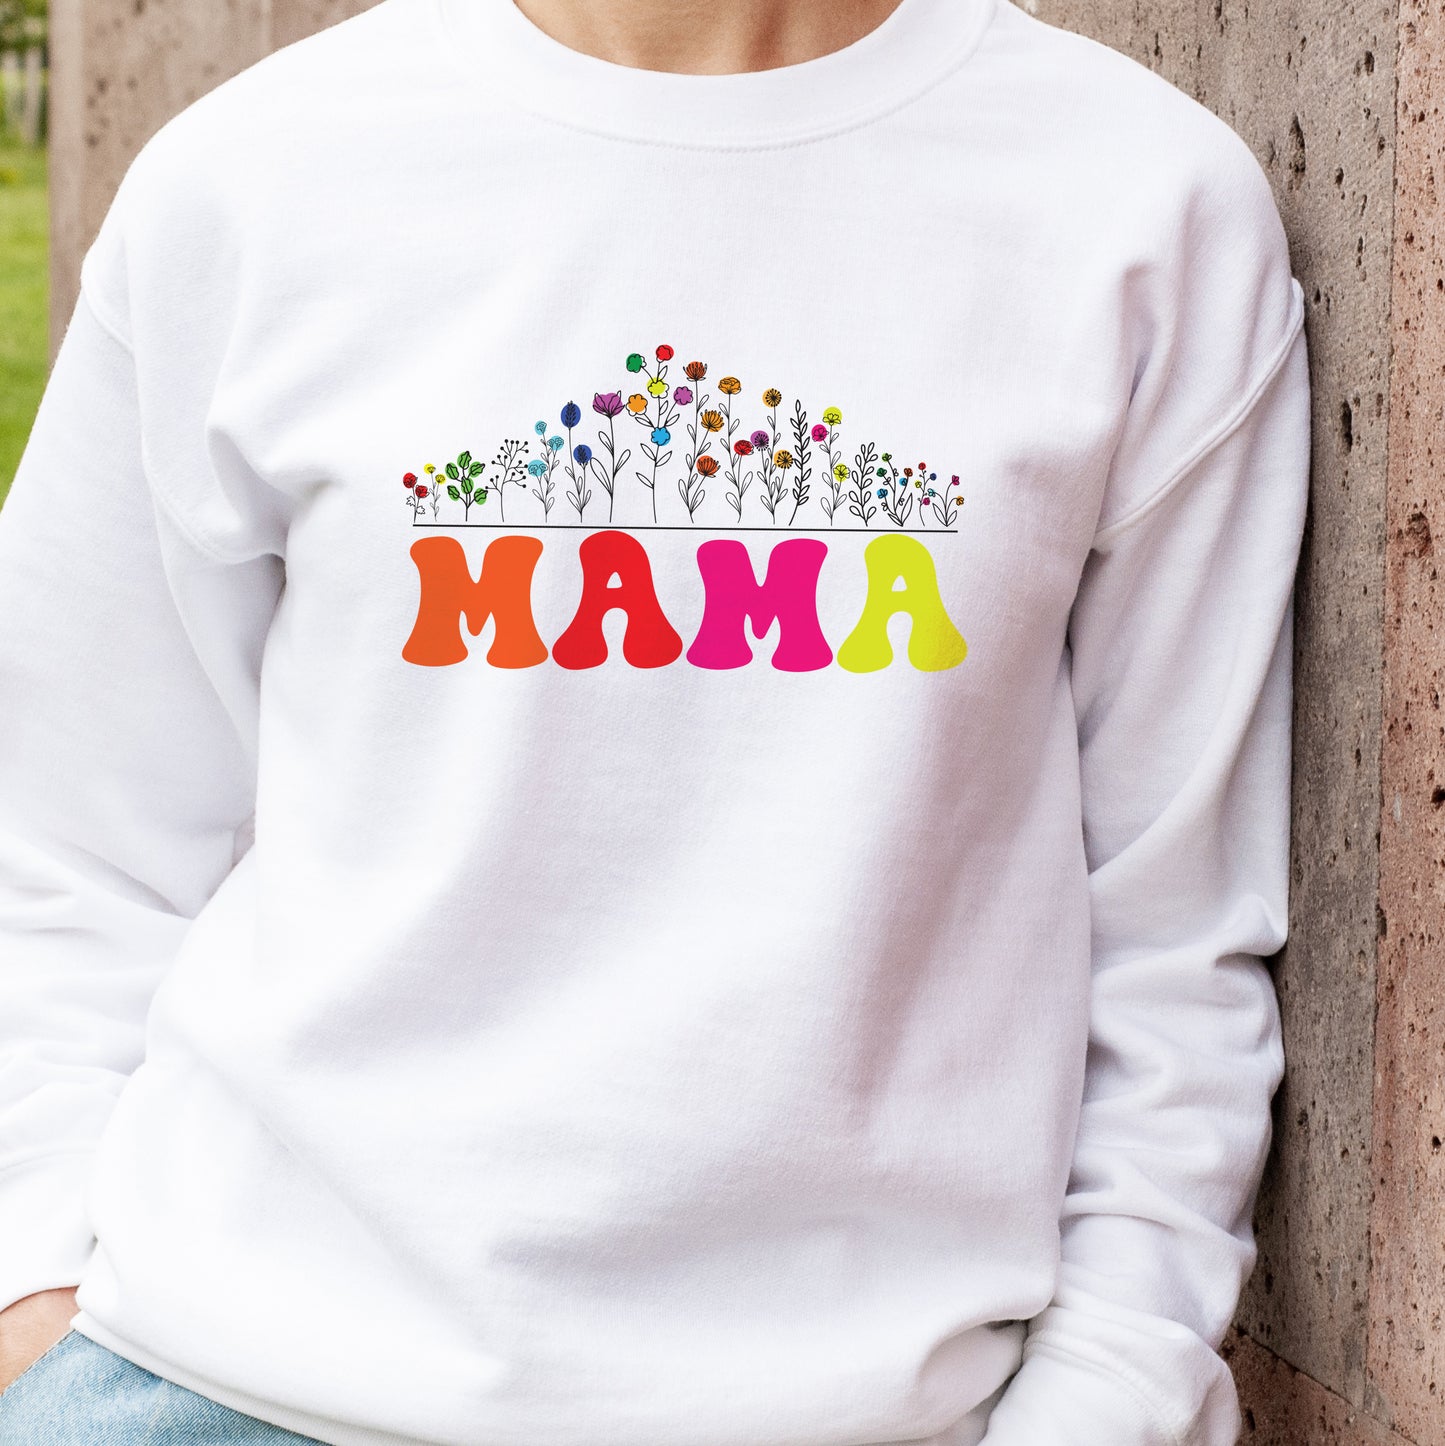 Parenting loungewear Mama jumper bright coloured print on a white sweatshirt